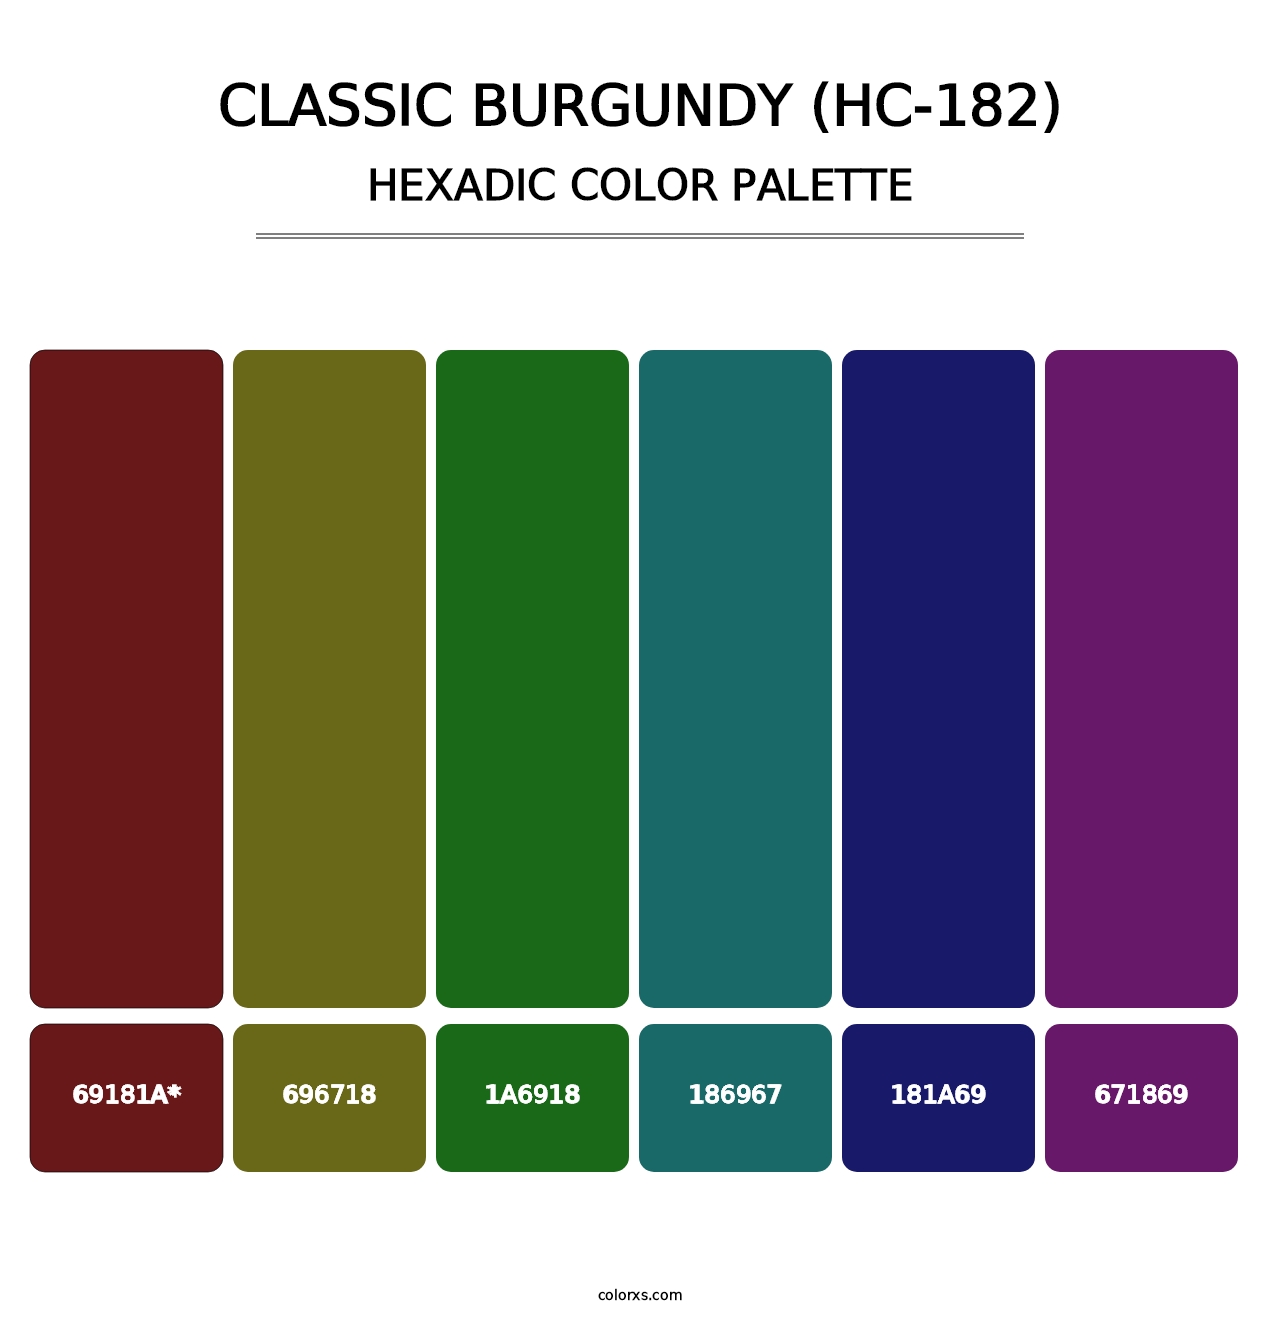 Classic Burgundy (HC-182) - Hexadic Color Palette